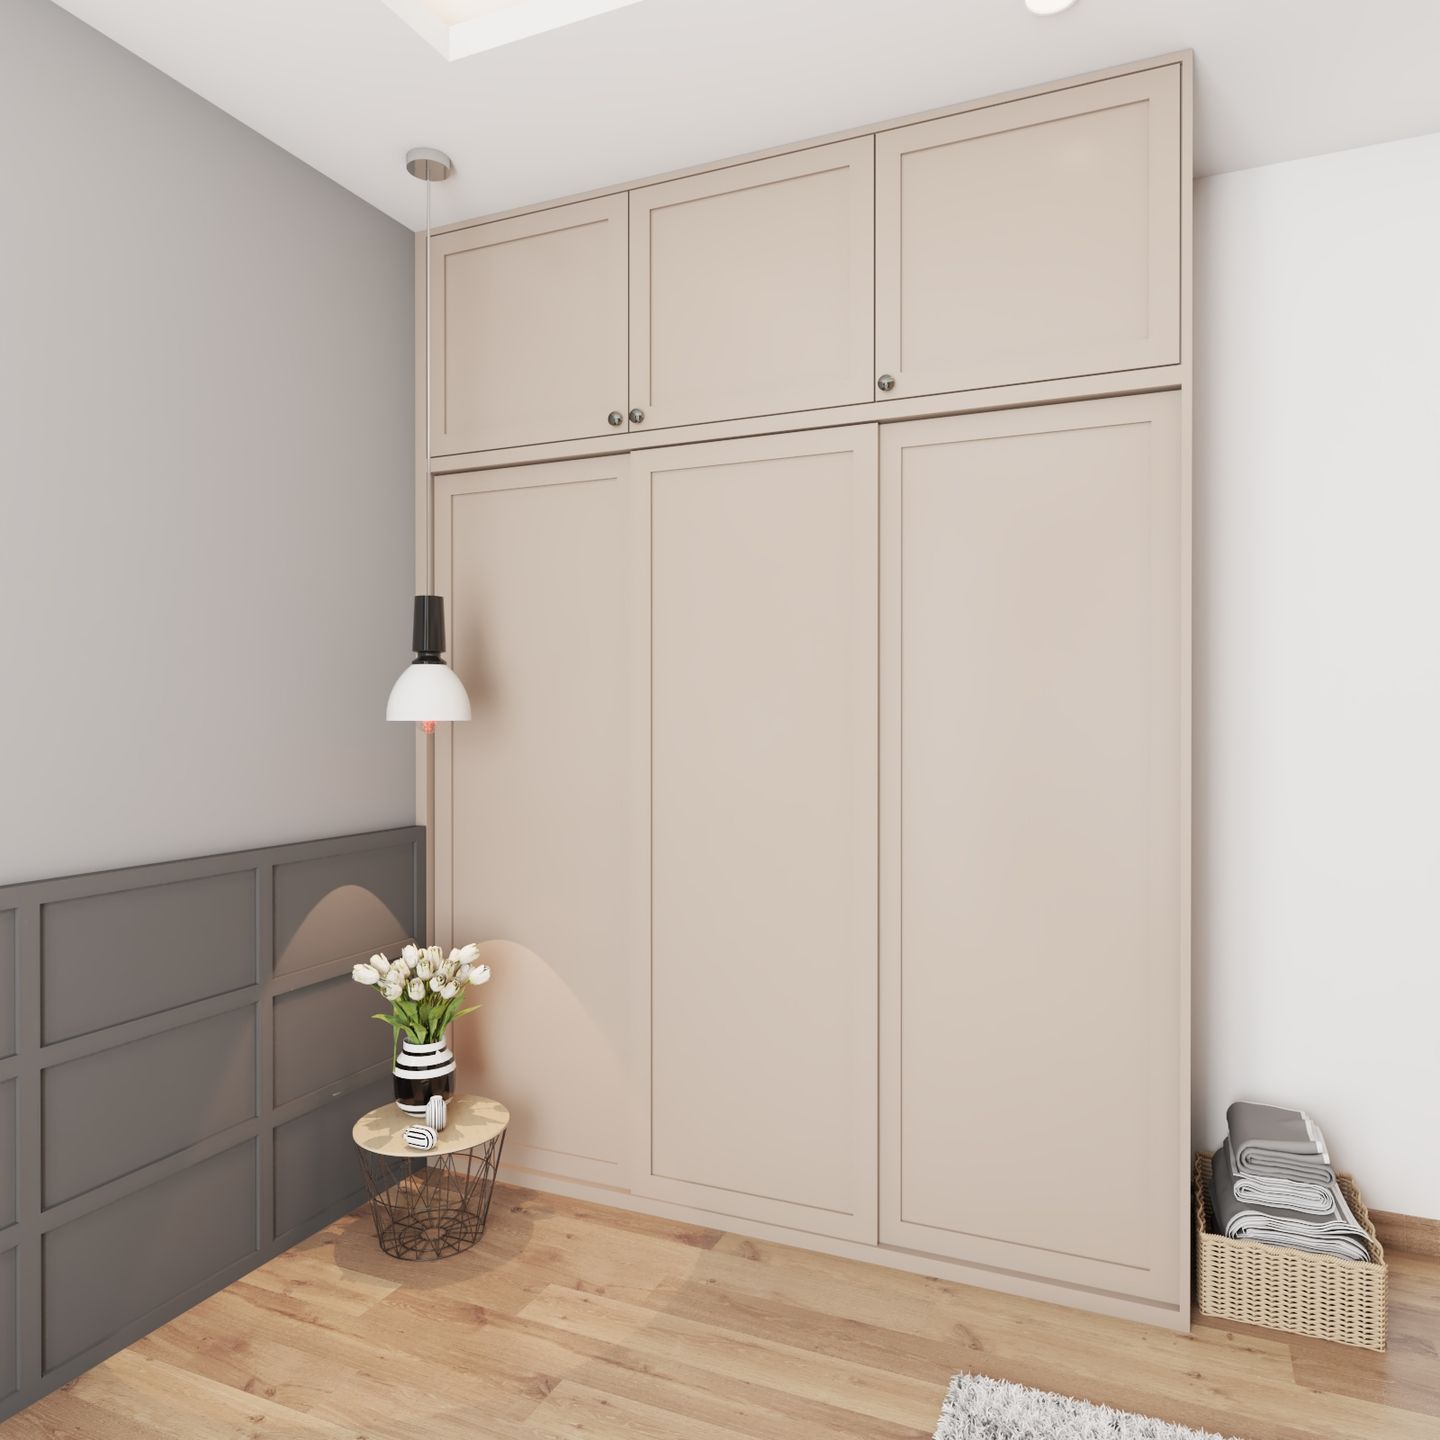 Cream-Toned 3-Door Sliding Wardrobe Design With Lofts - Livspace